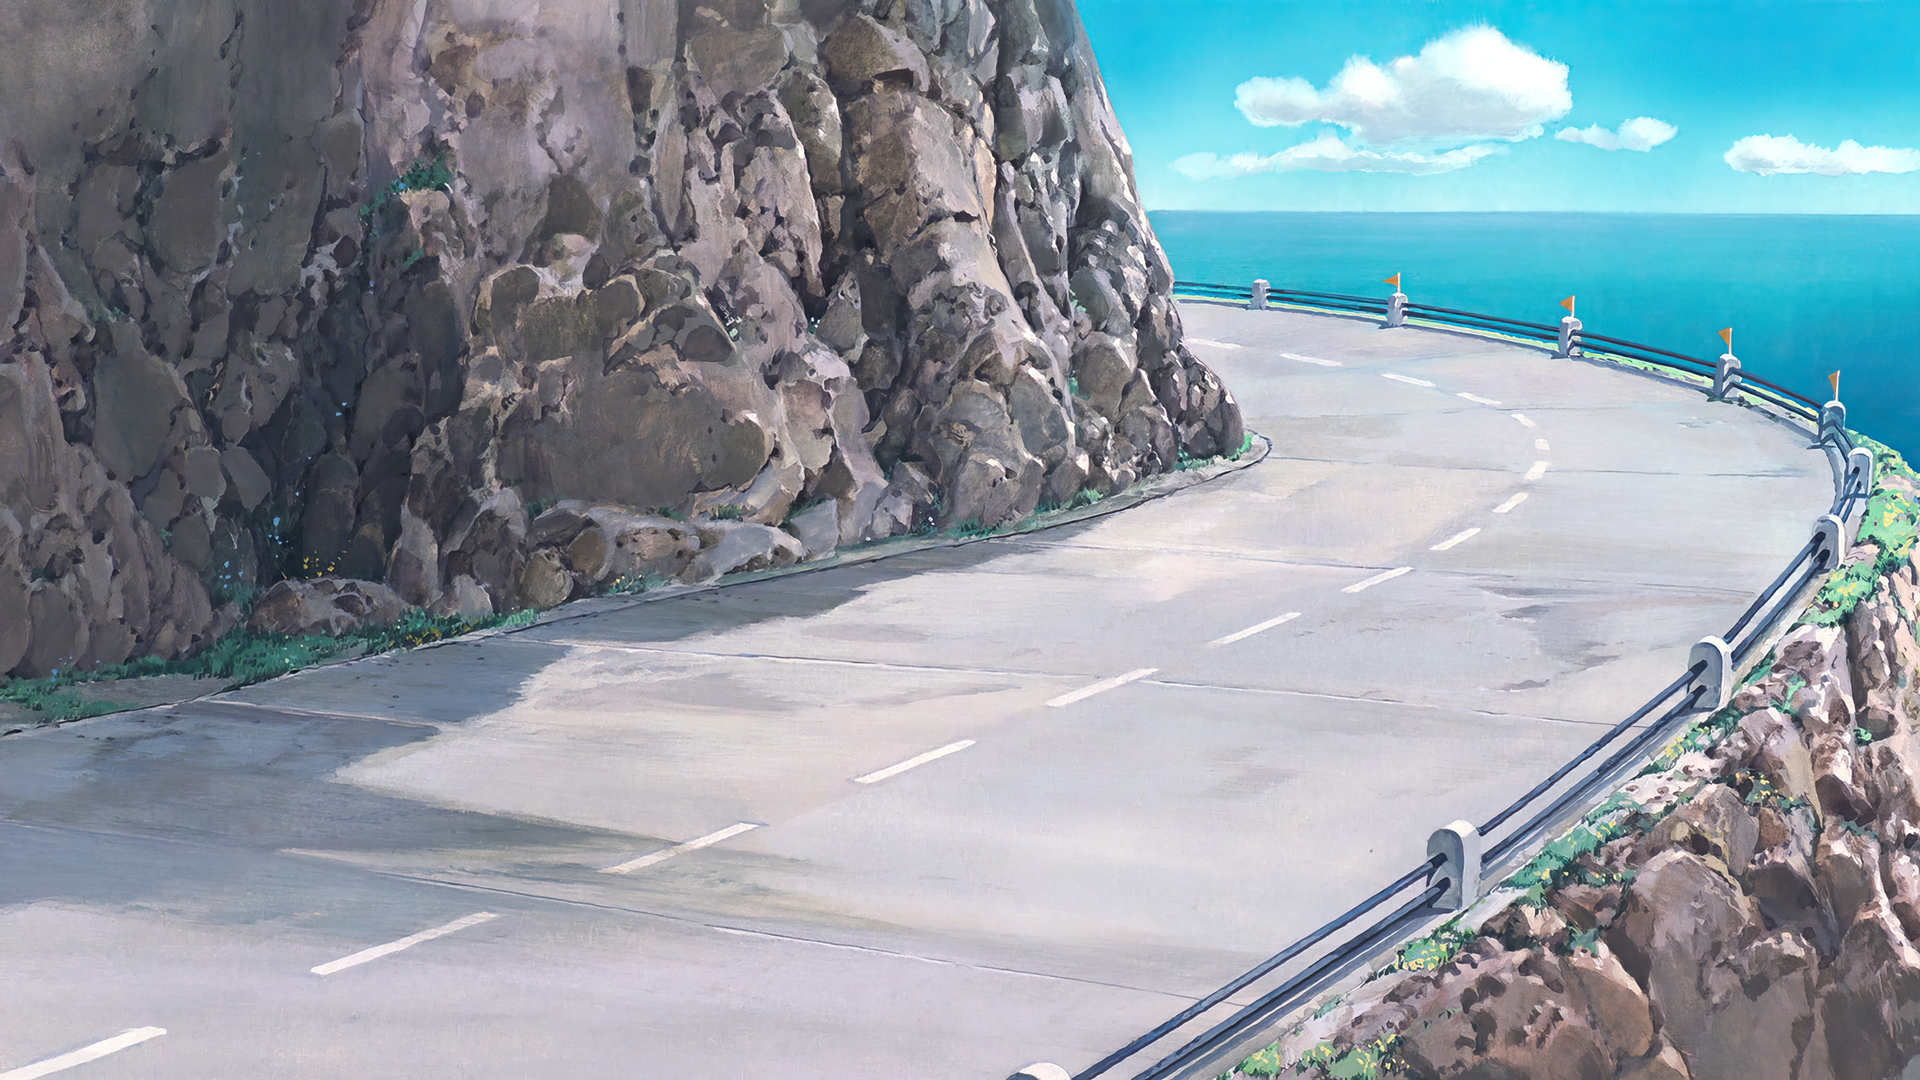 Anime 1920x1080 Kiki's Delivery Service animated movies anime animation Studio Ghibli Hayao Miyazaki road rocks water clouds film stills